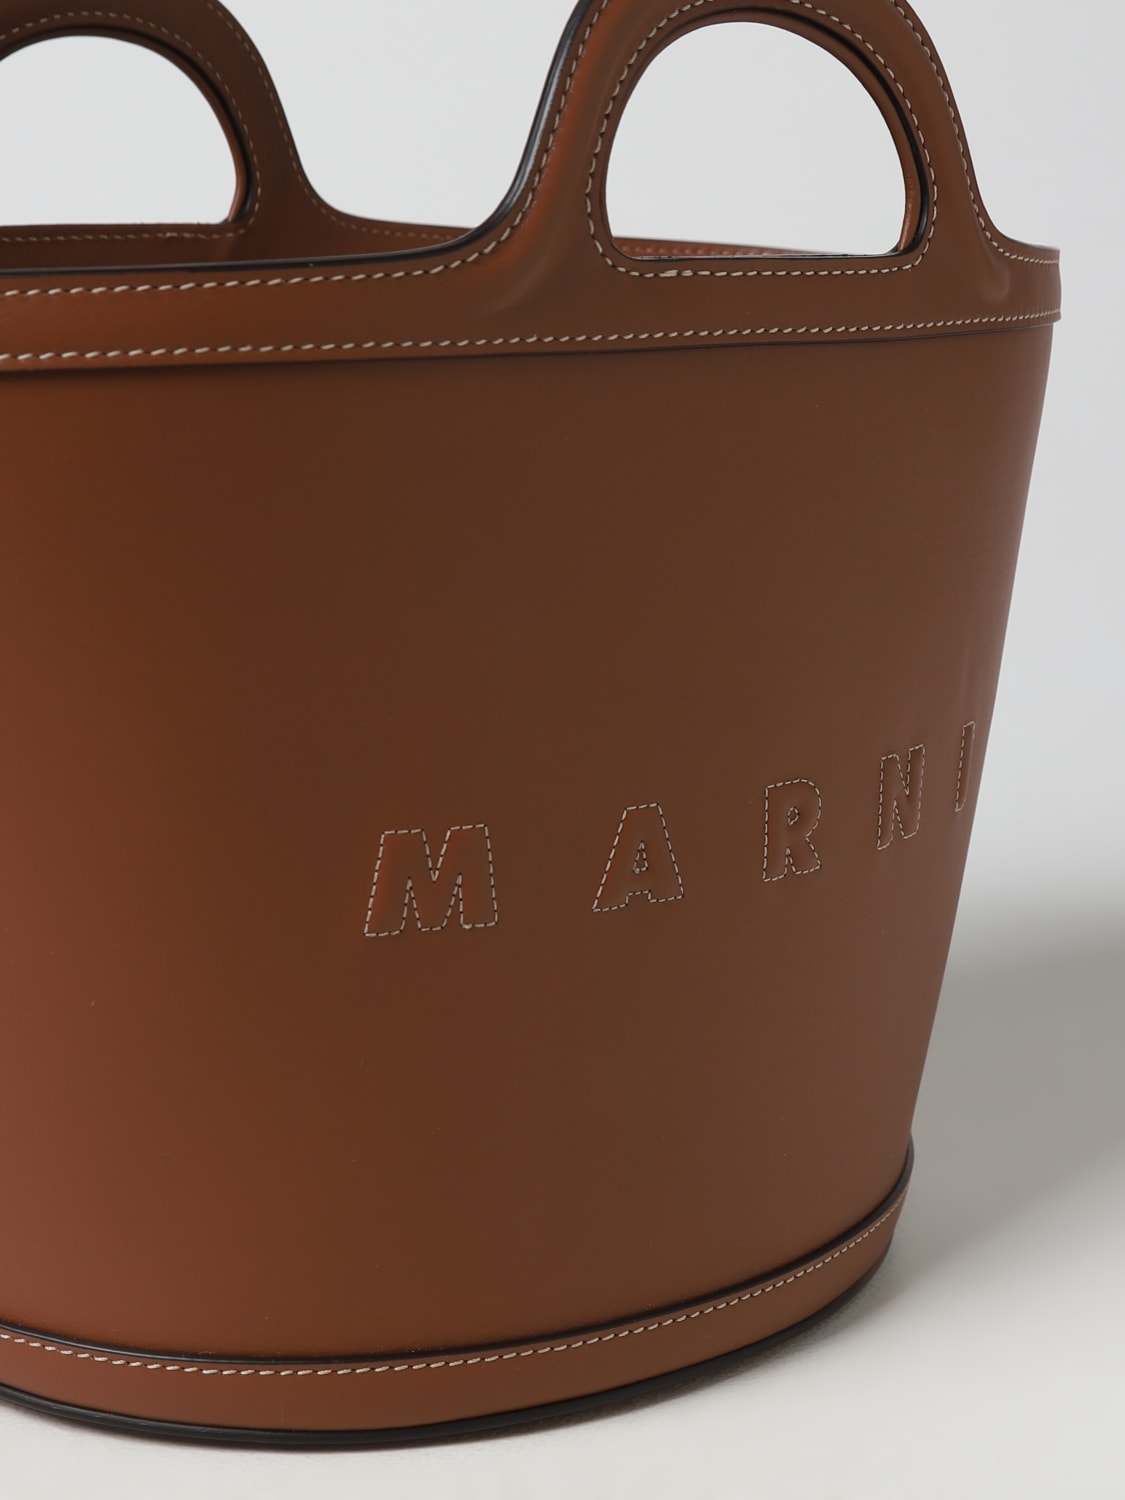 MARNI: Tropicalia leather bag - Dark  Marni handbag BMMP0097U0LV589 online  at